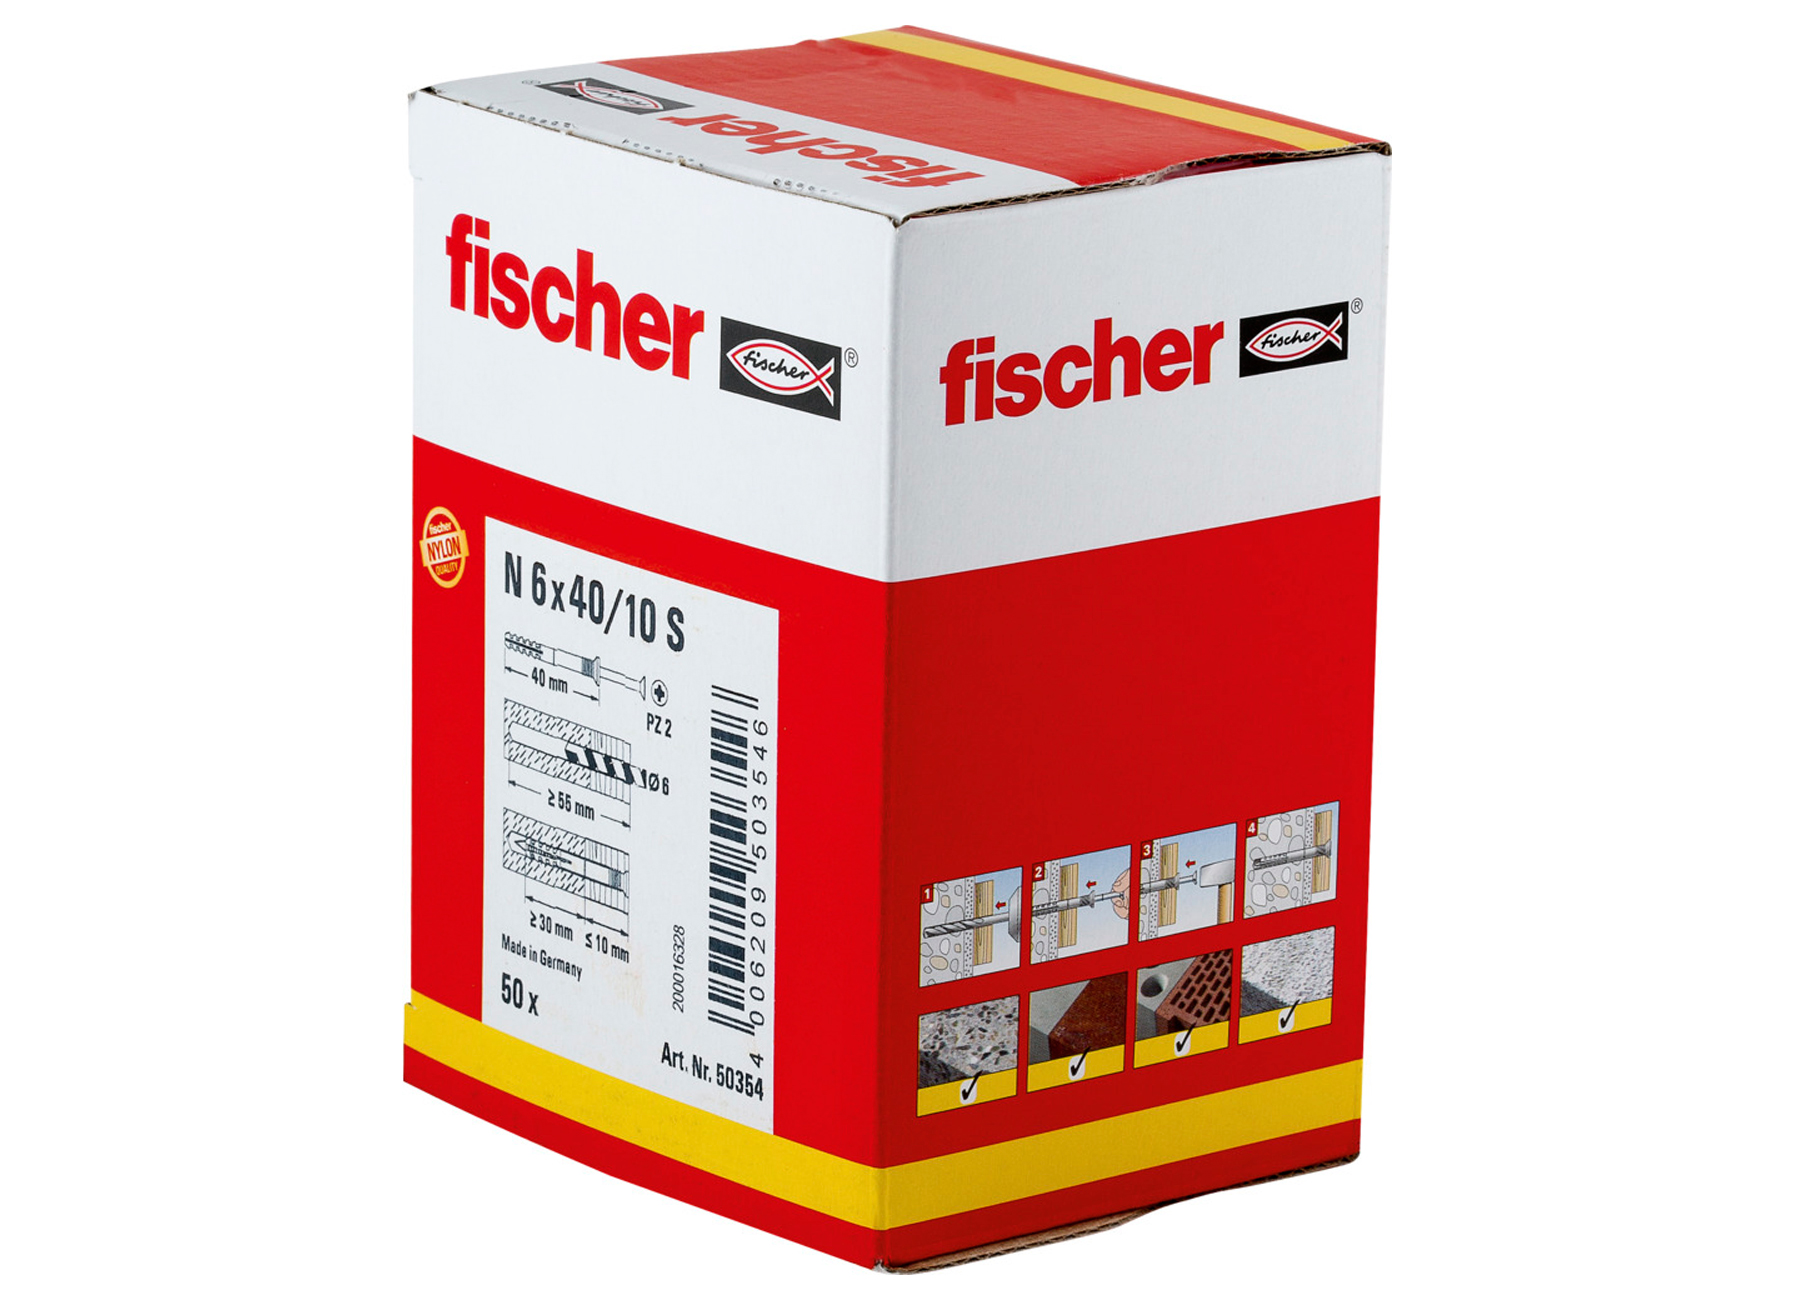 FISCHER CHEVILLE A FRAPPER N 6X40/10 S (50)